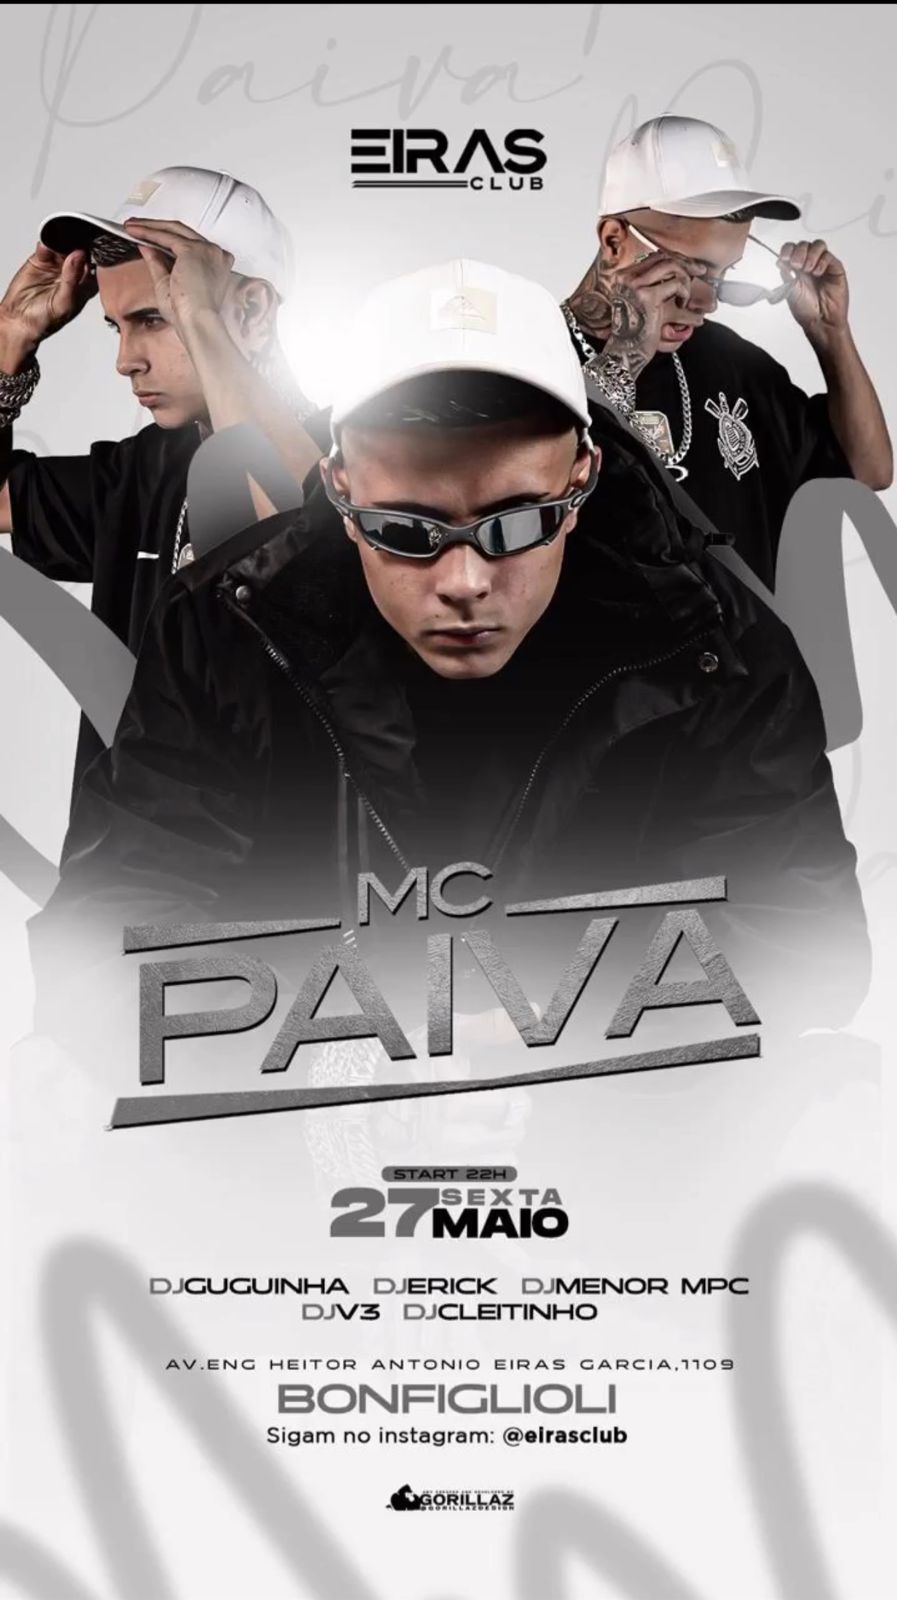 Eiras Club: MC PAIVA